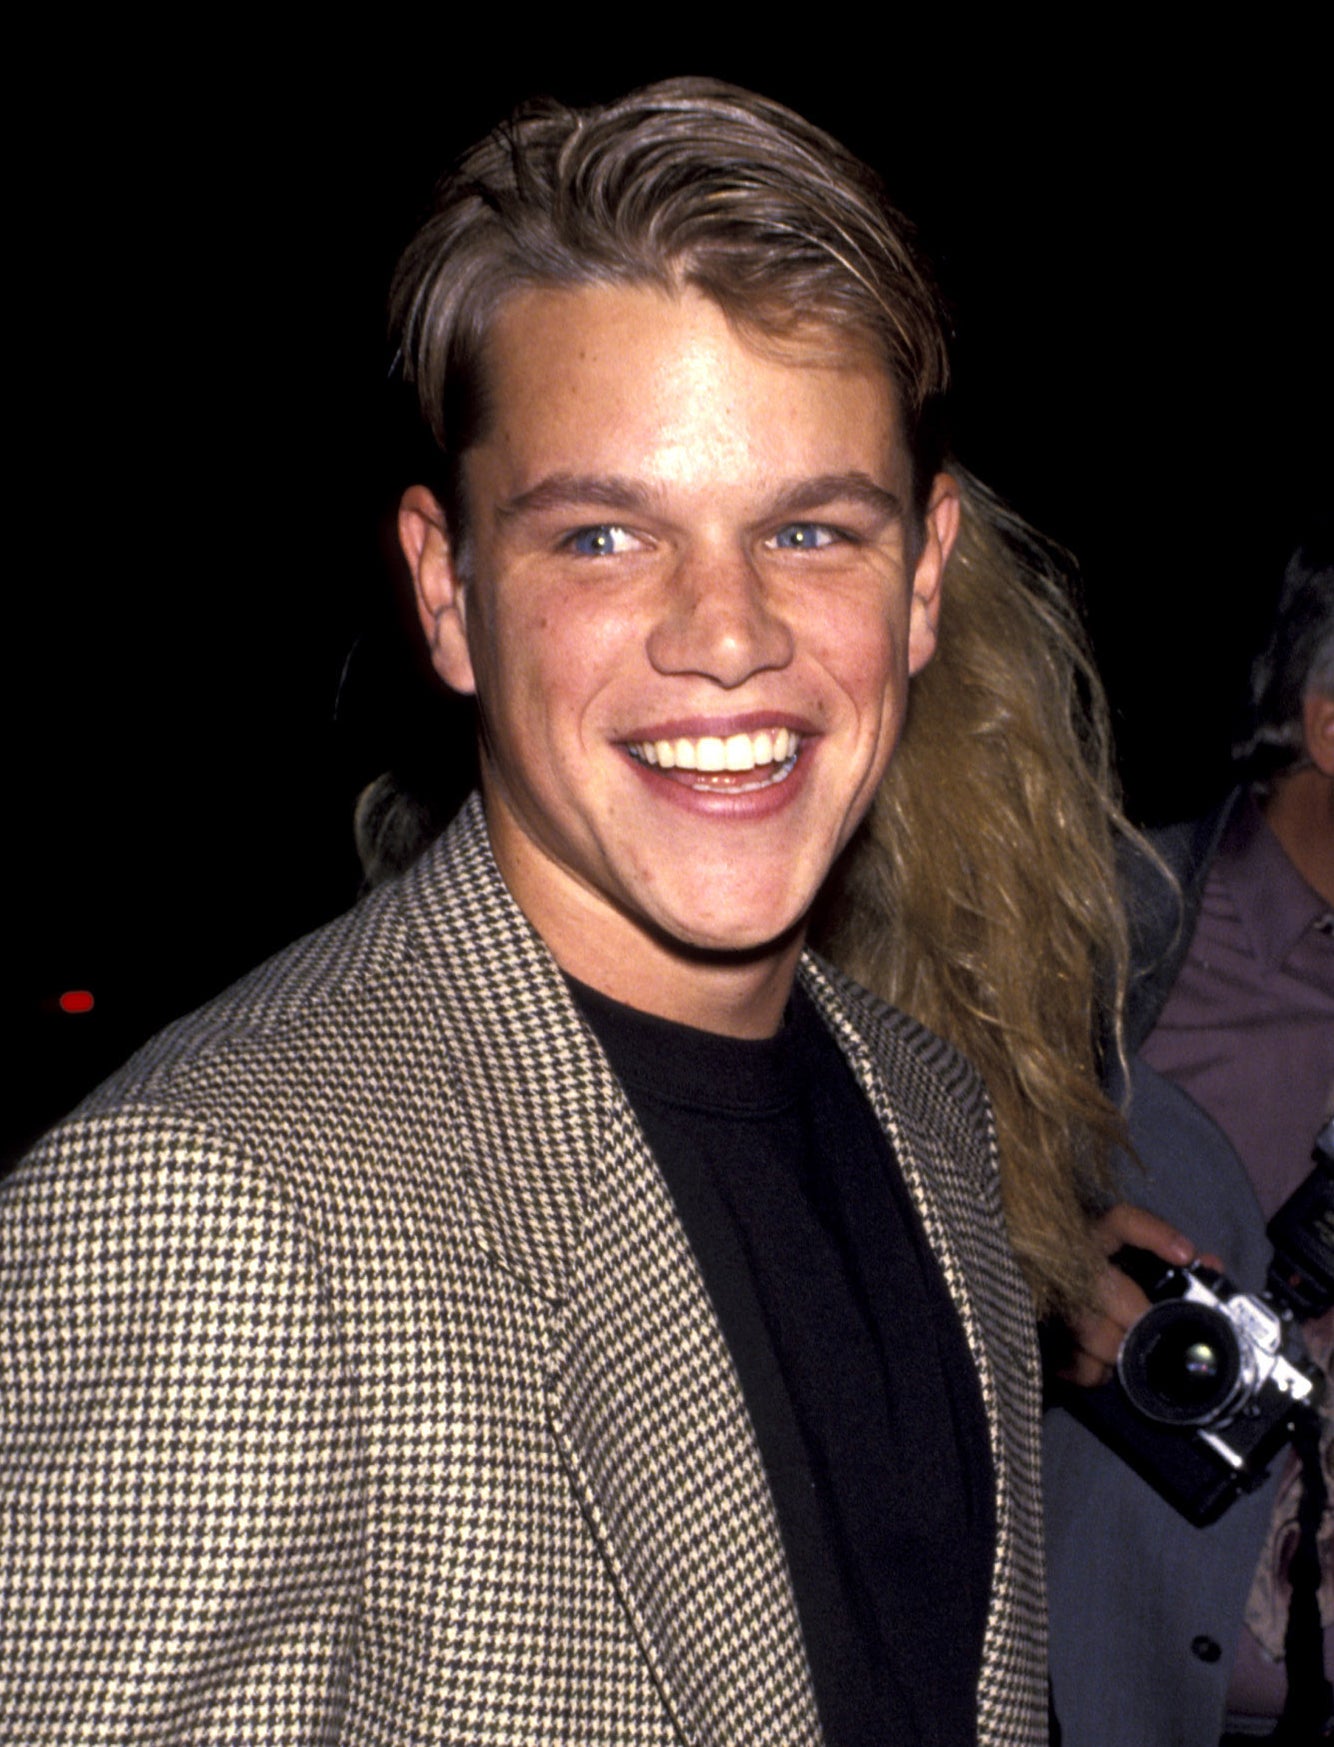 Closeup of Matt Damon smiling widely